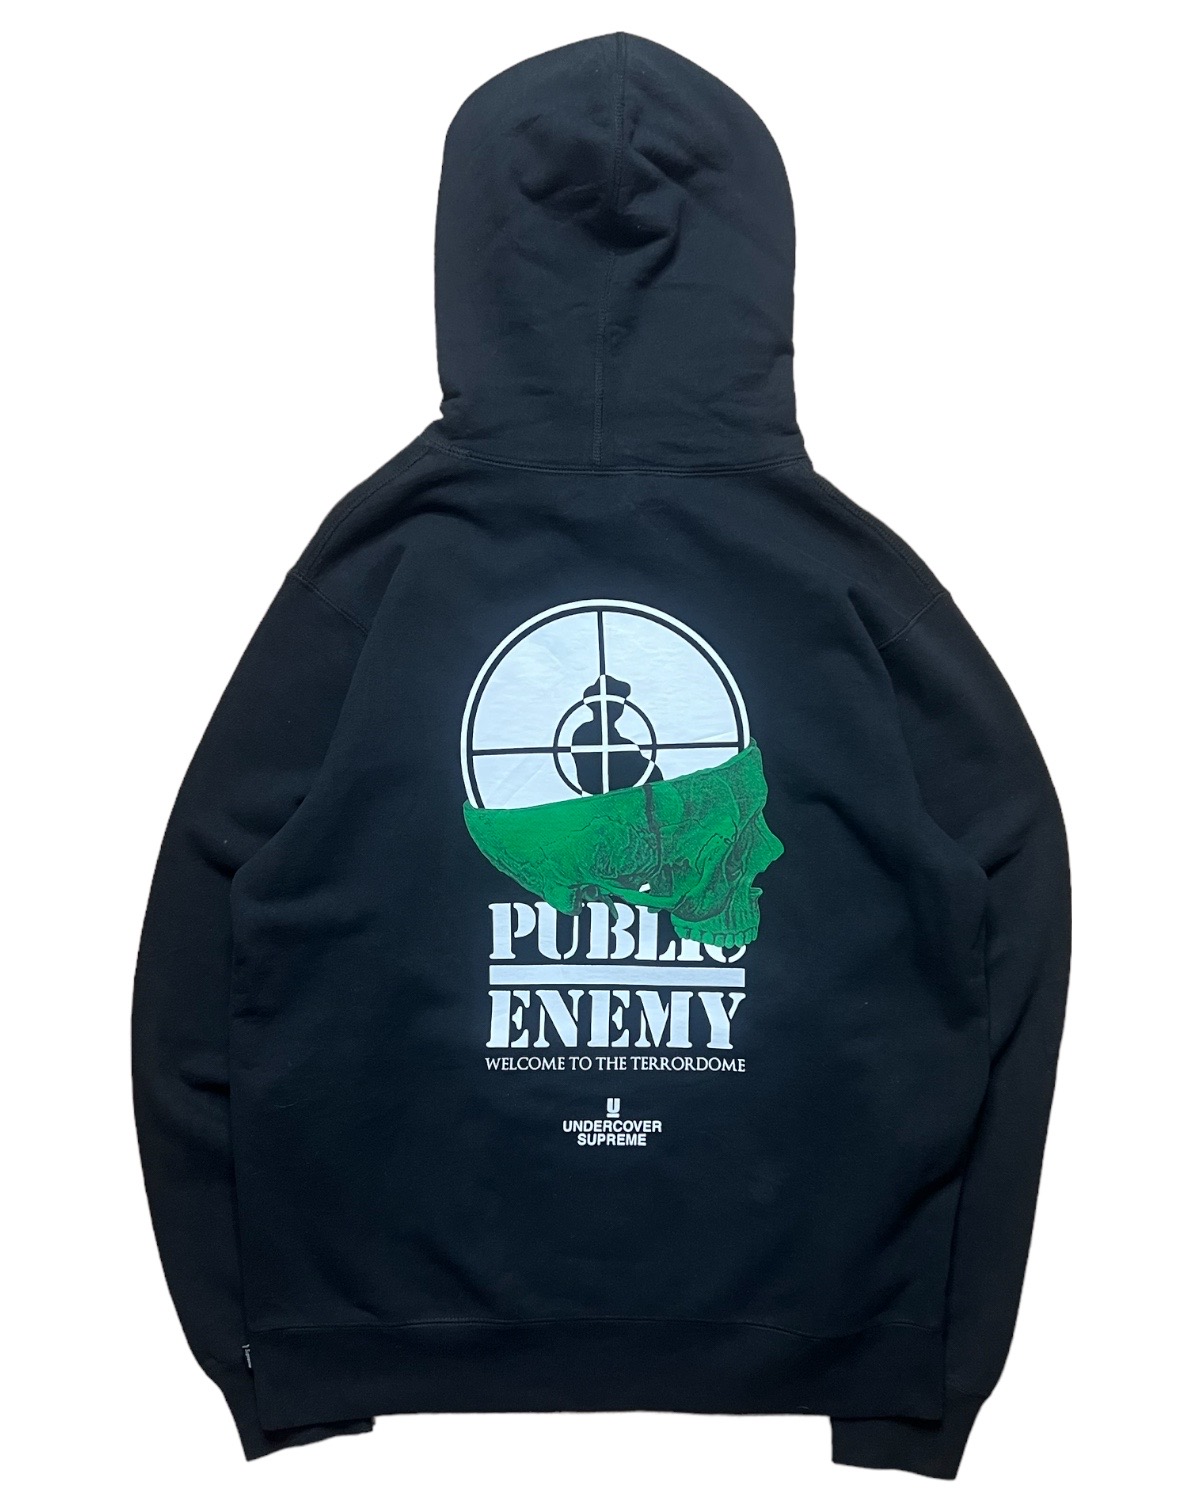 Supreme x Undercover x Public enemy hoodie